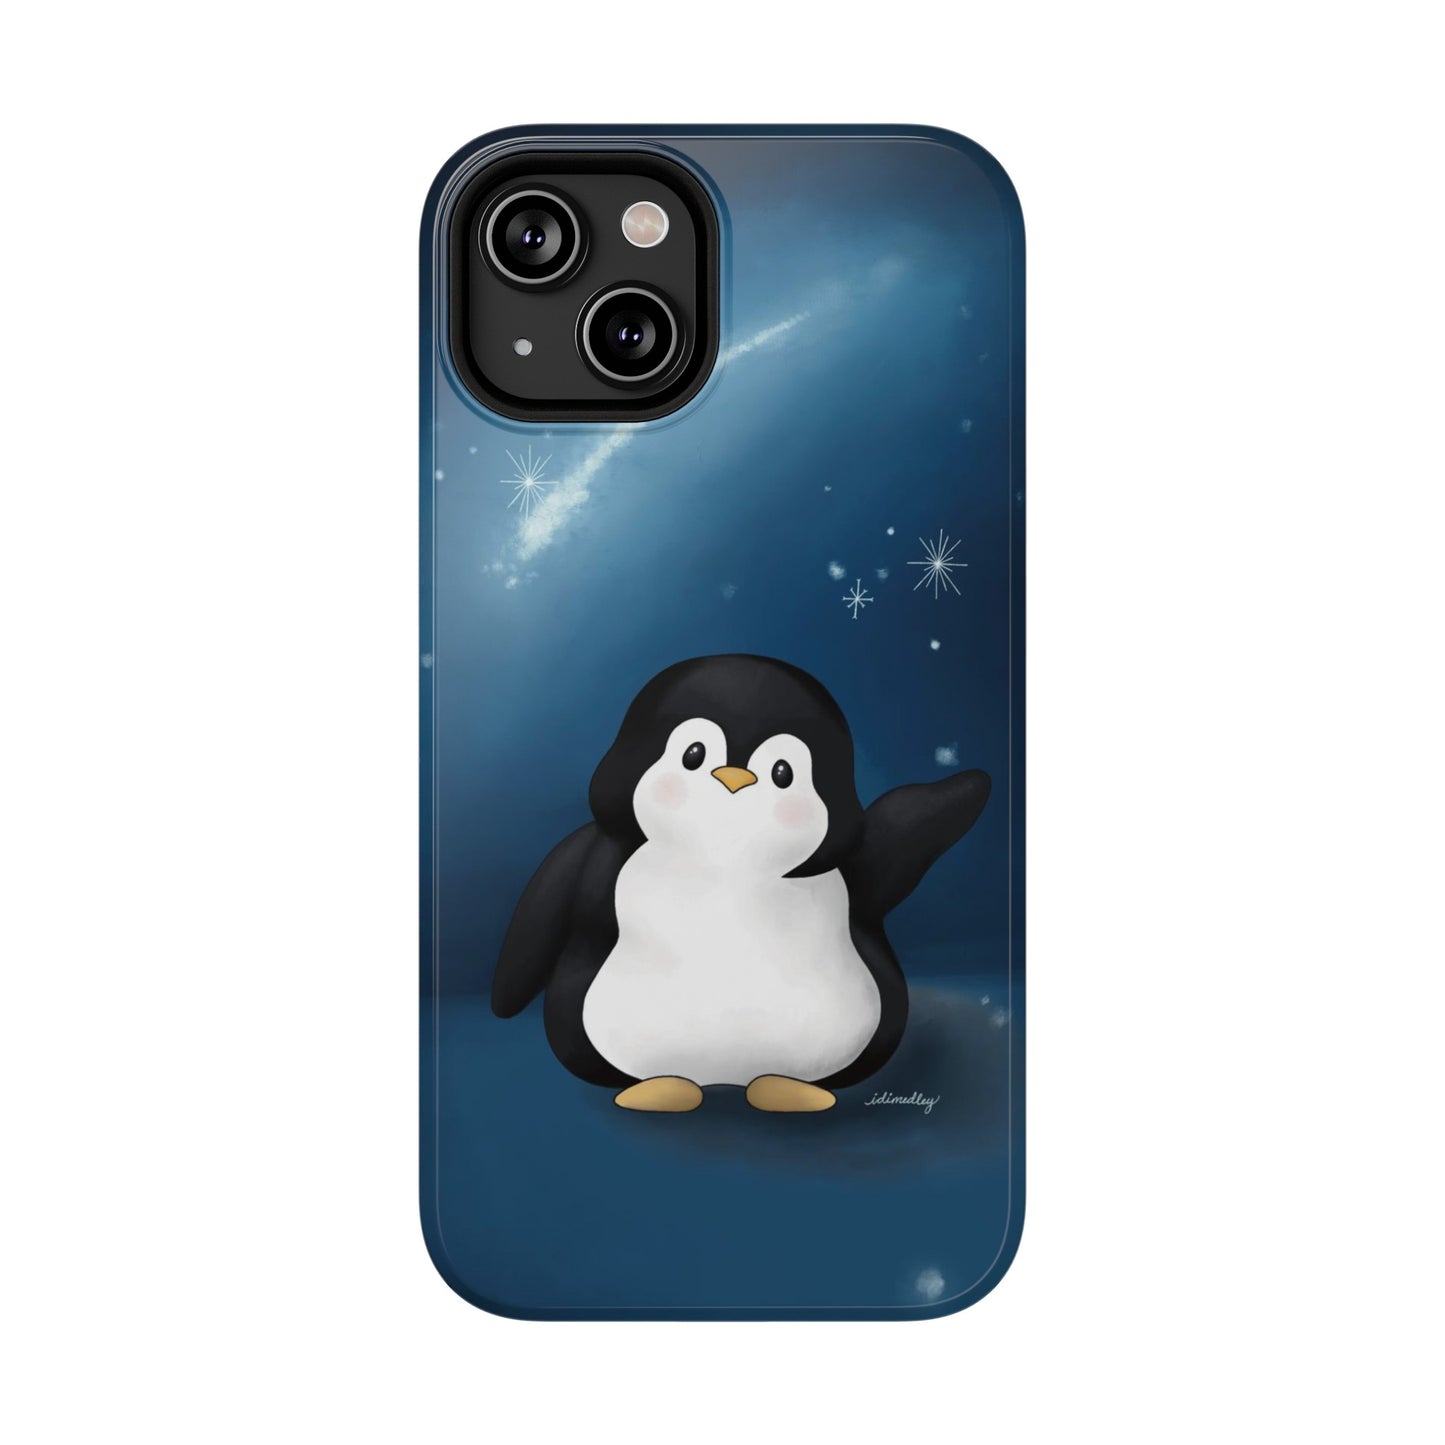 Penguin in Starry Blue Night Skies